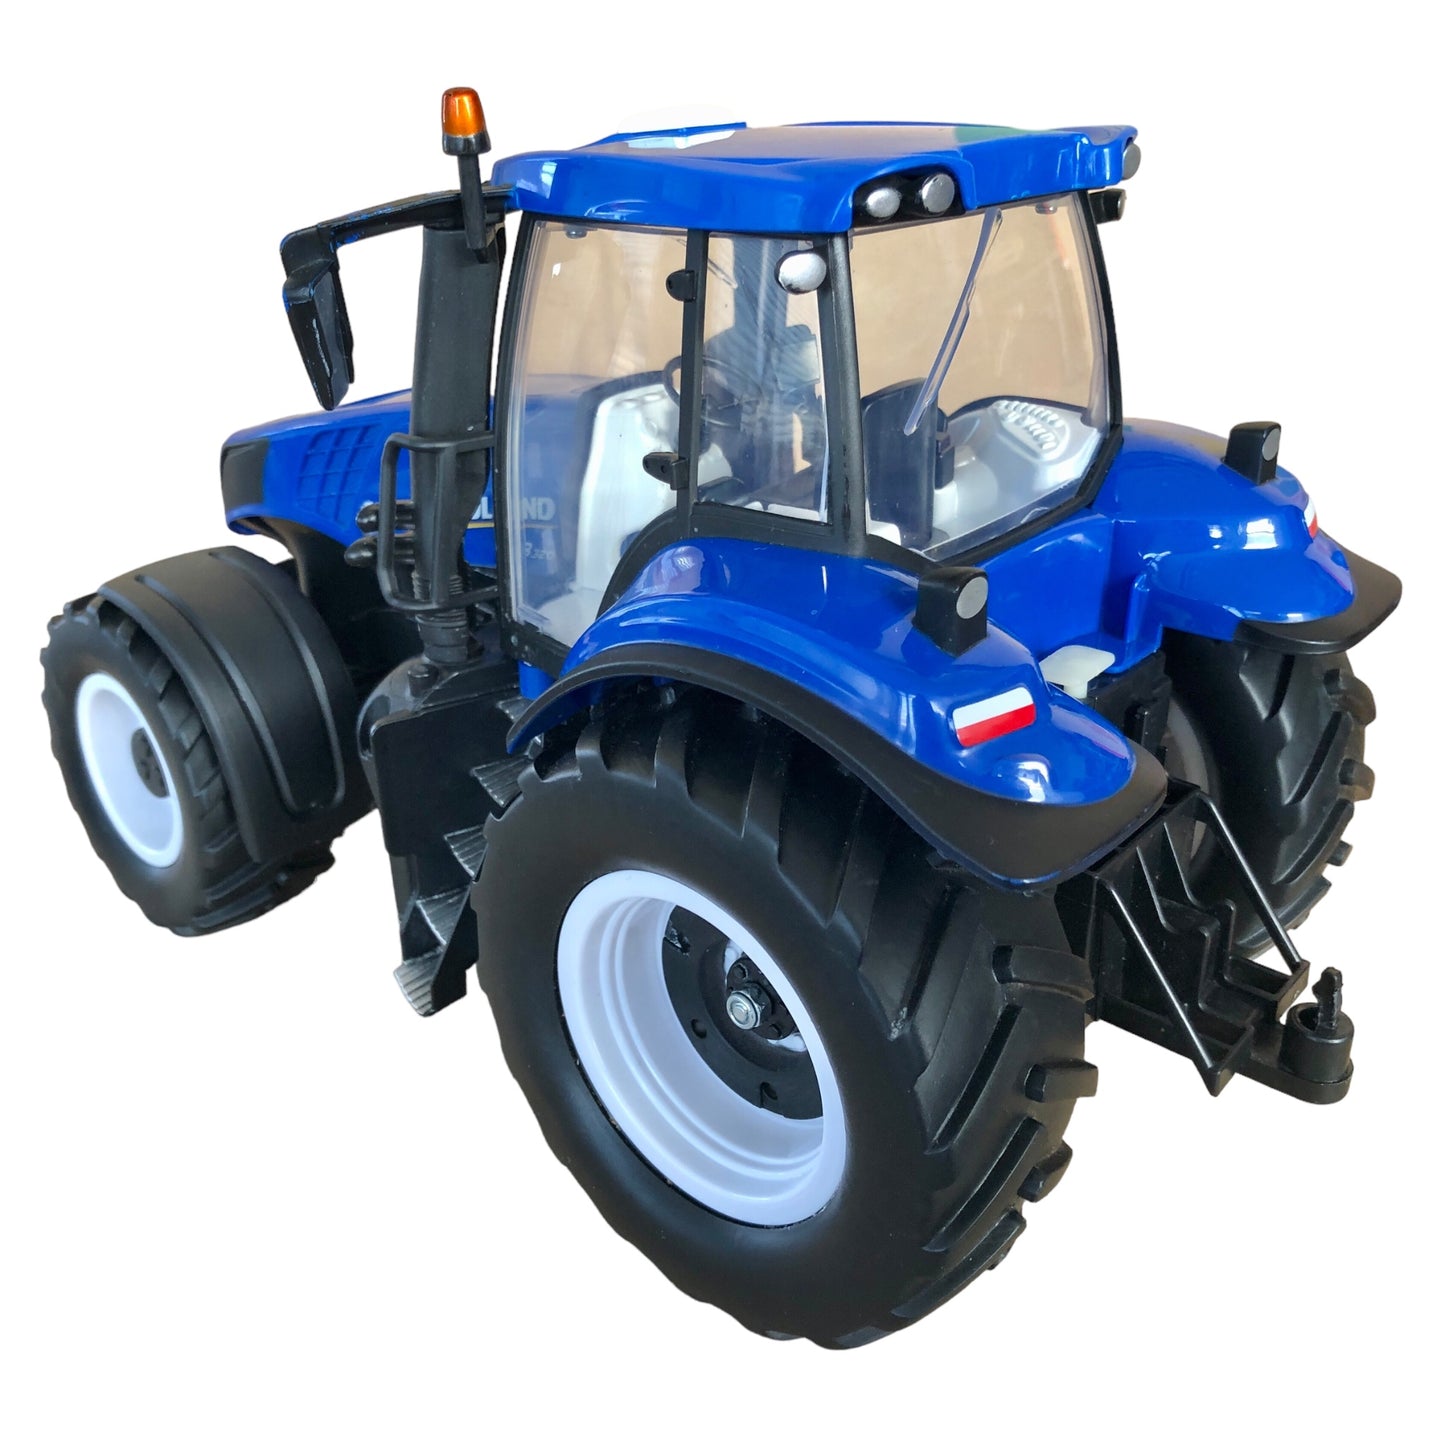 Maisto – New Holland RC ferngesteuerter Traktor